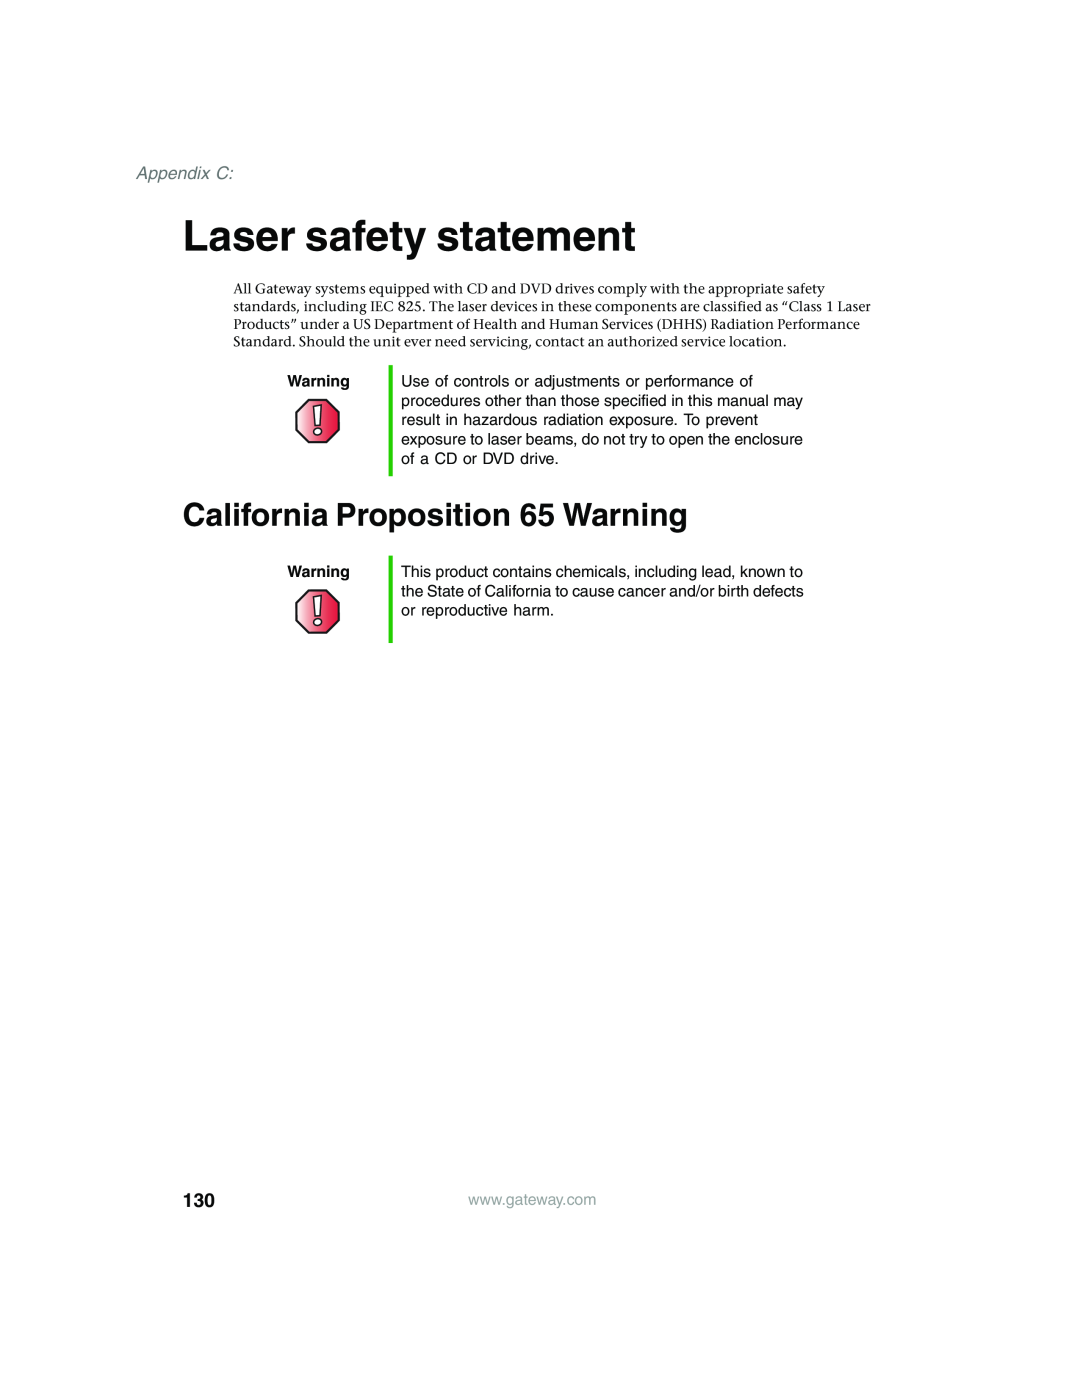 Gateway 955 manual Laser safety statement, California Proposition 65 Warning, Appendix C 